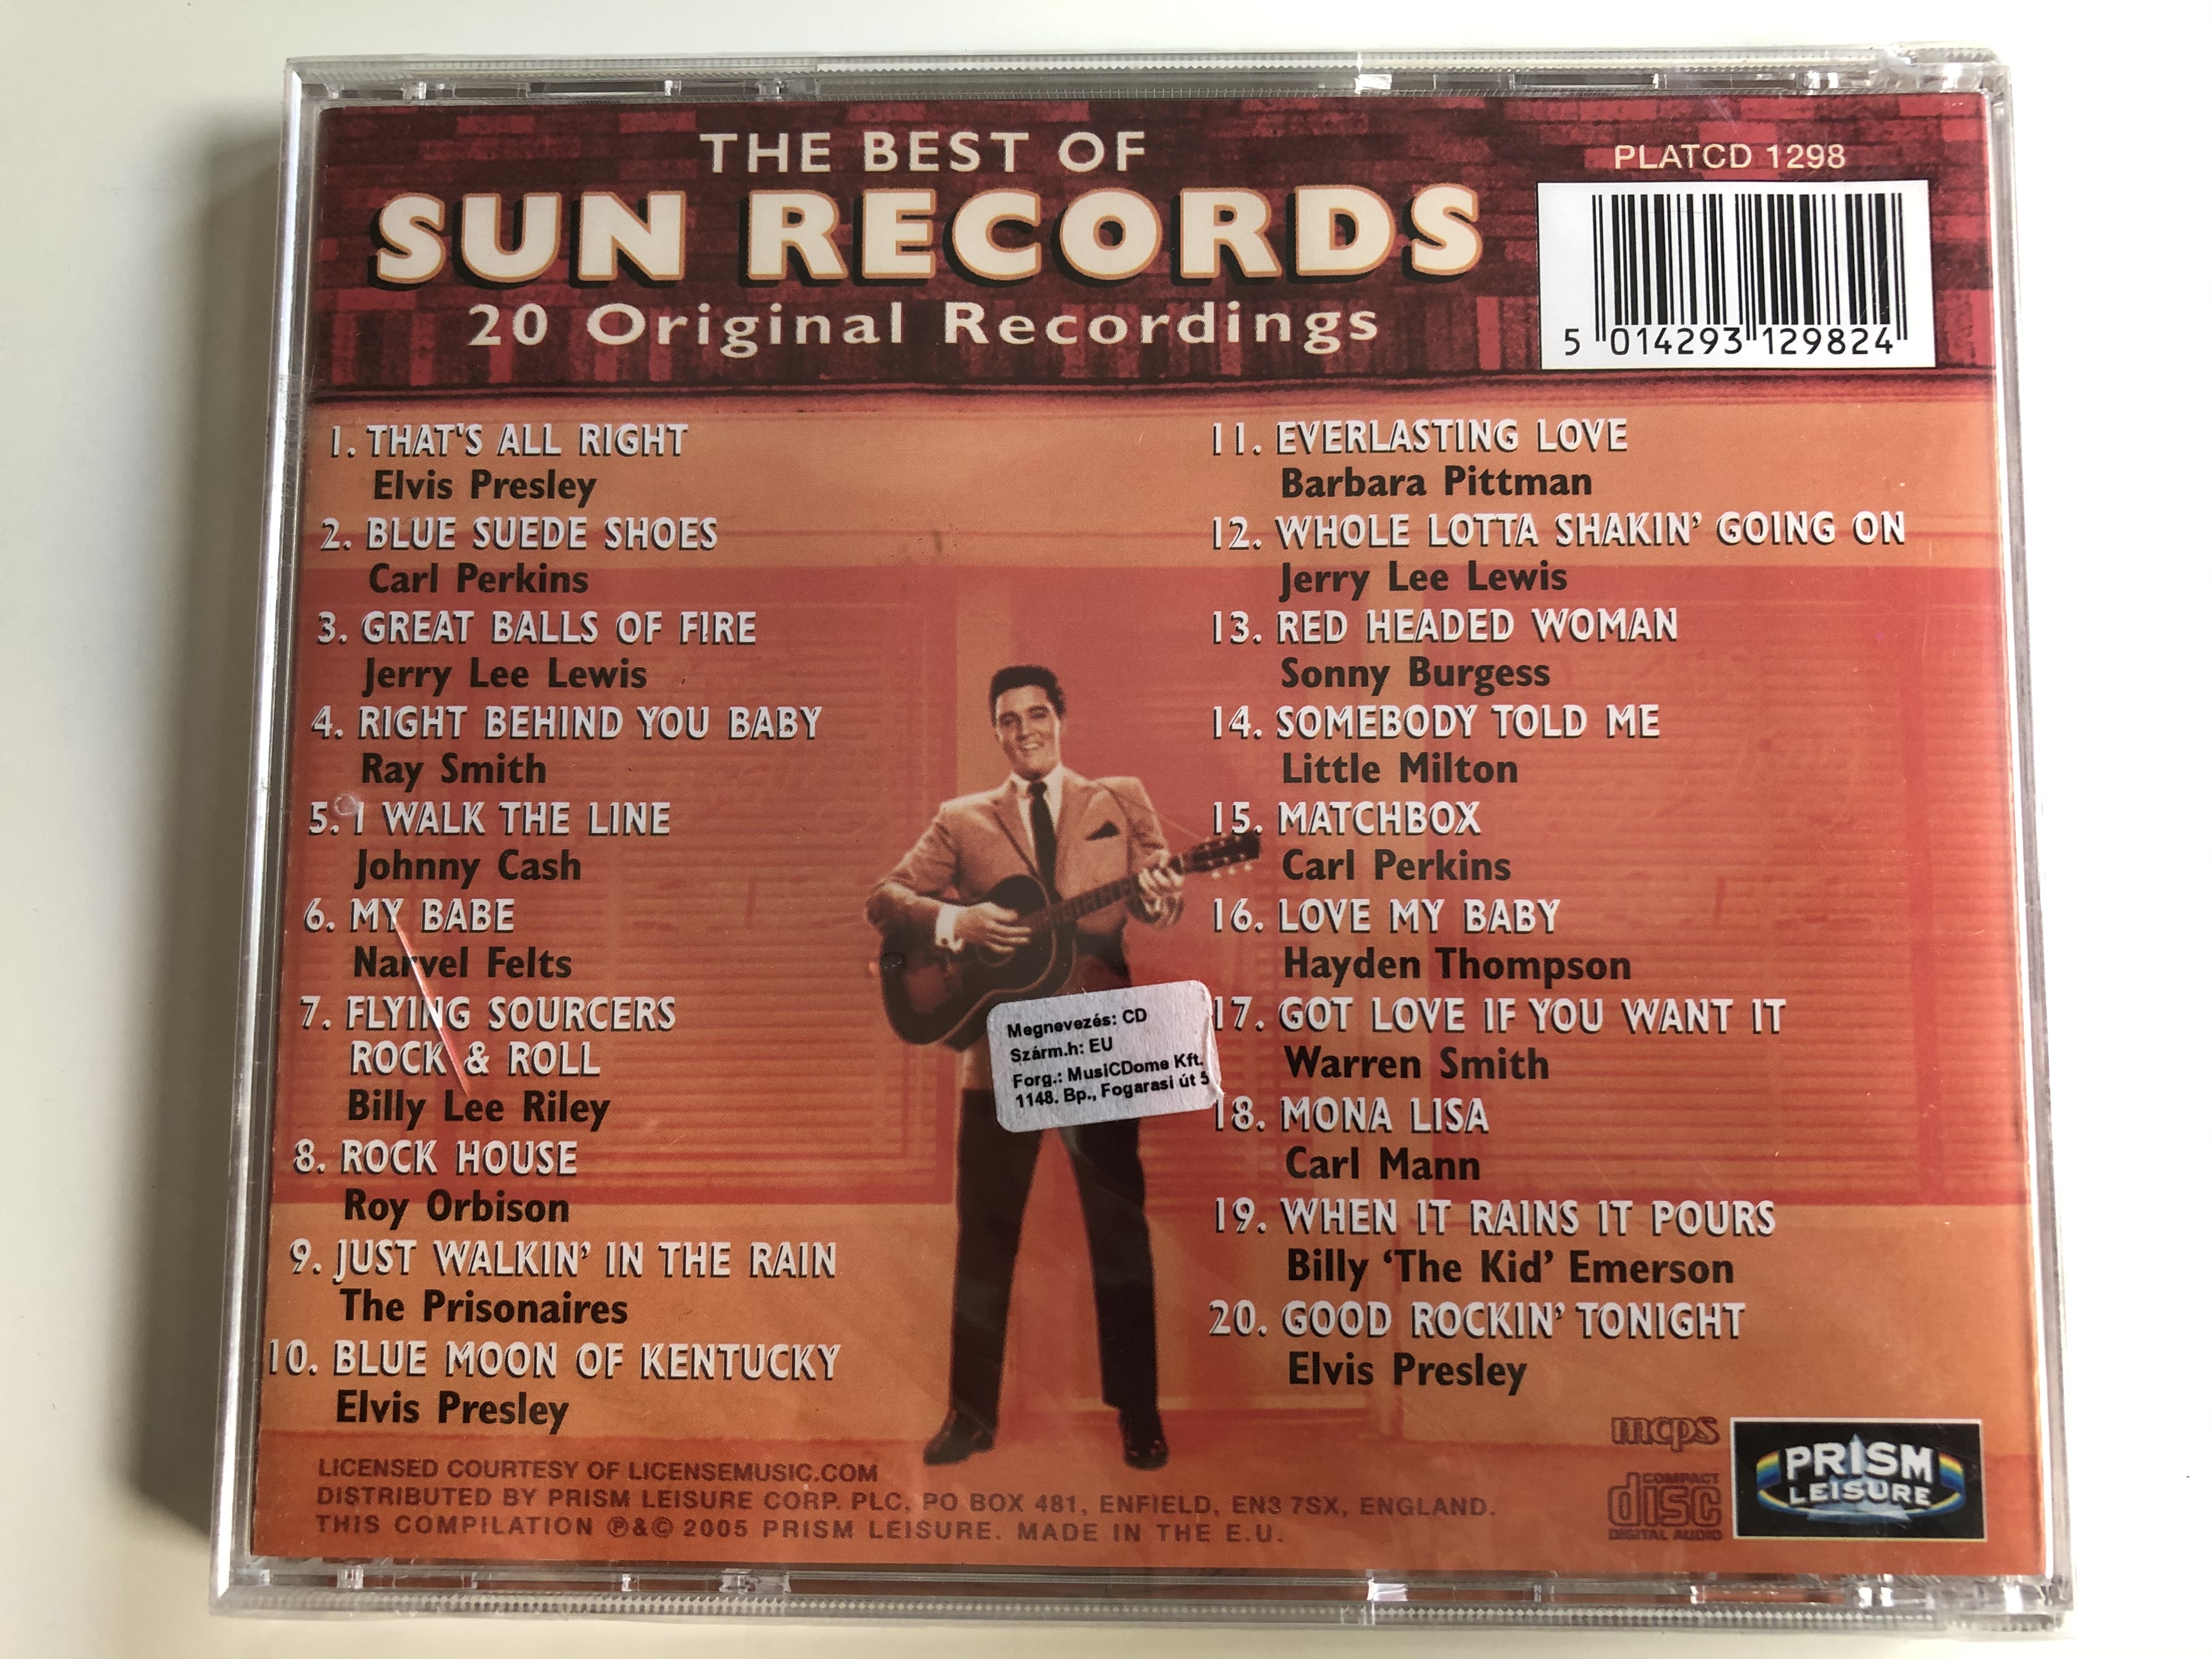 the-best-of-sun-records-20-original-recordings-featuring-elvis-presley-roy-orbison-johnny-cash-jerry-lee-lewis-carl-perkins-prism-leisure-audio-cd-2005-platcd1298-2-.jpg